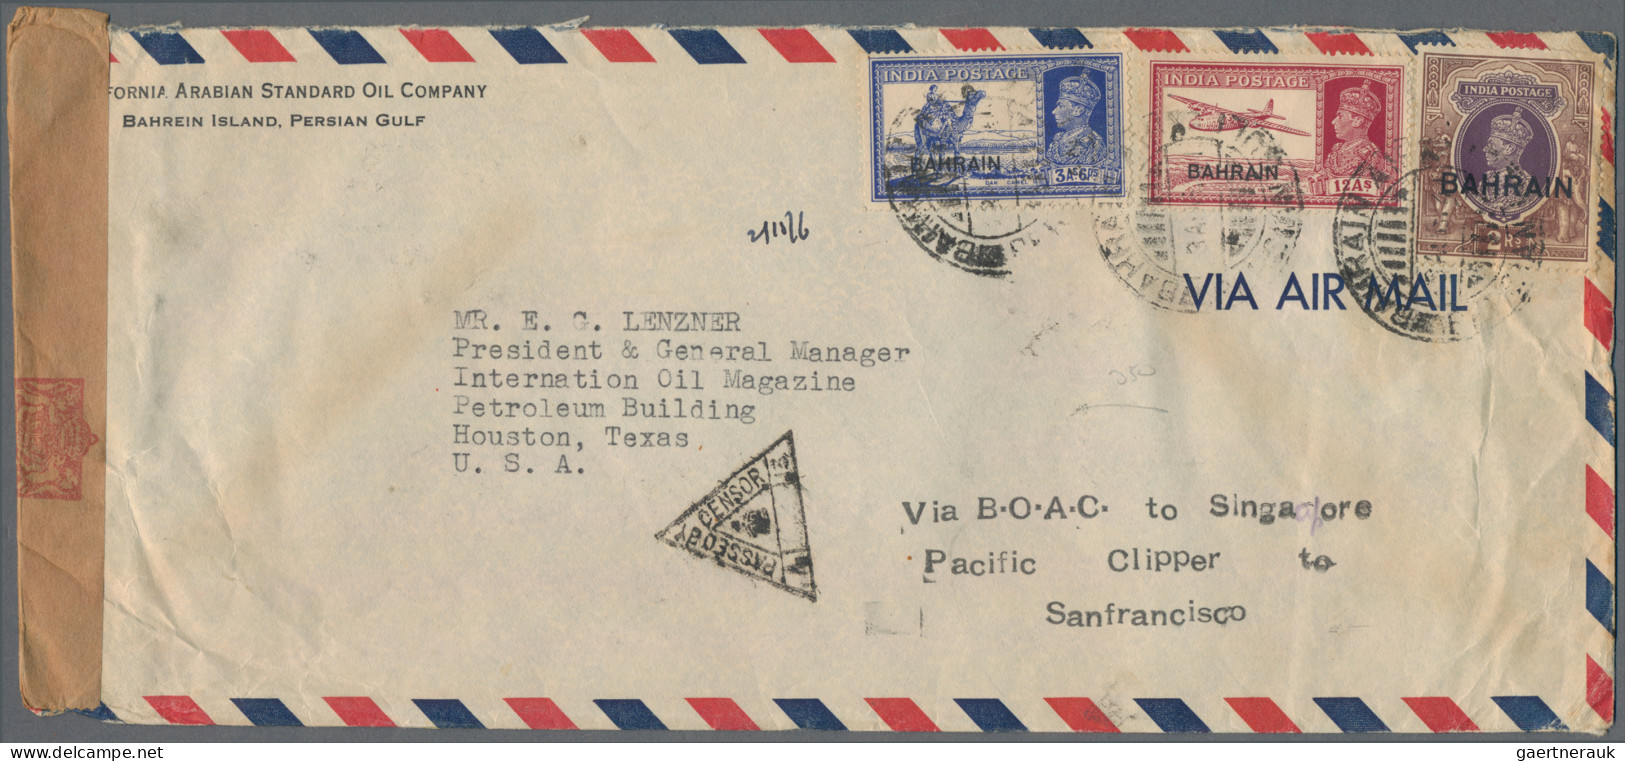 Bahrain: 1941 Censored Airmail Envelope Used From Bahrain To Houston, Texas, U.S - Bahrain (1965-...)